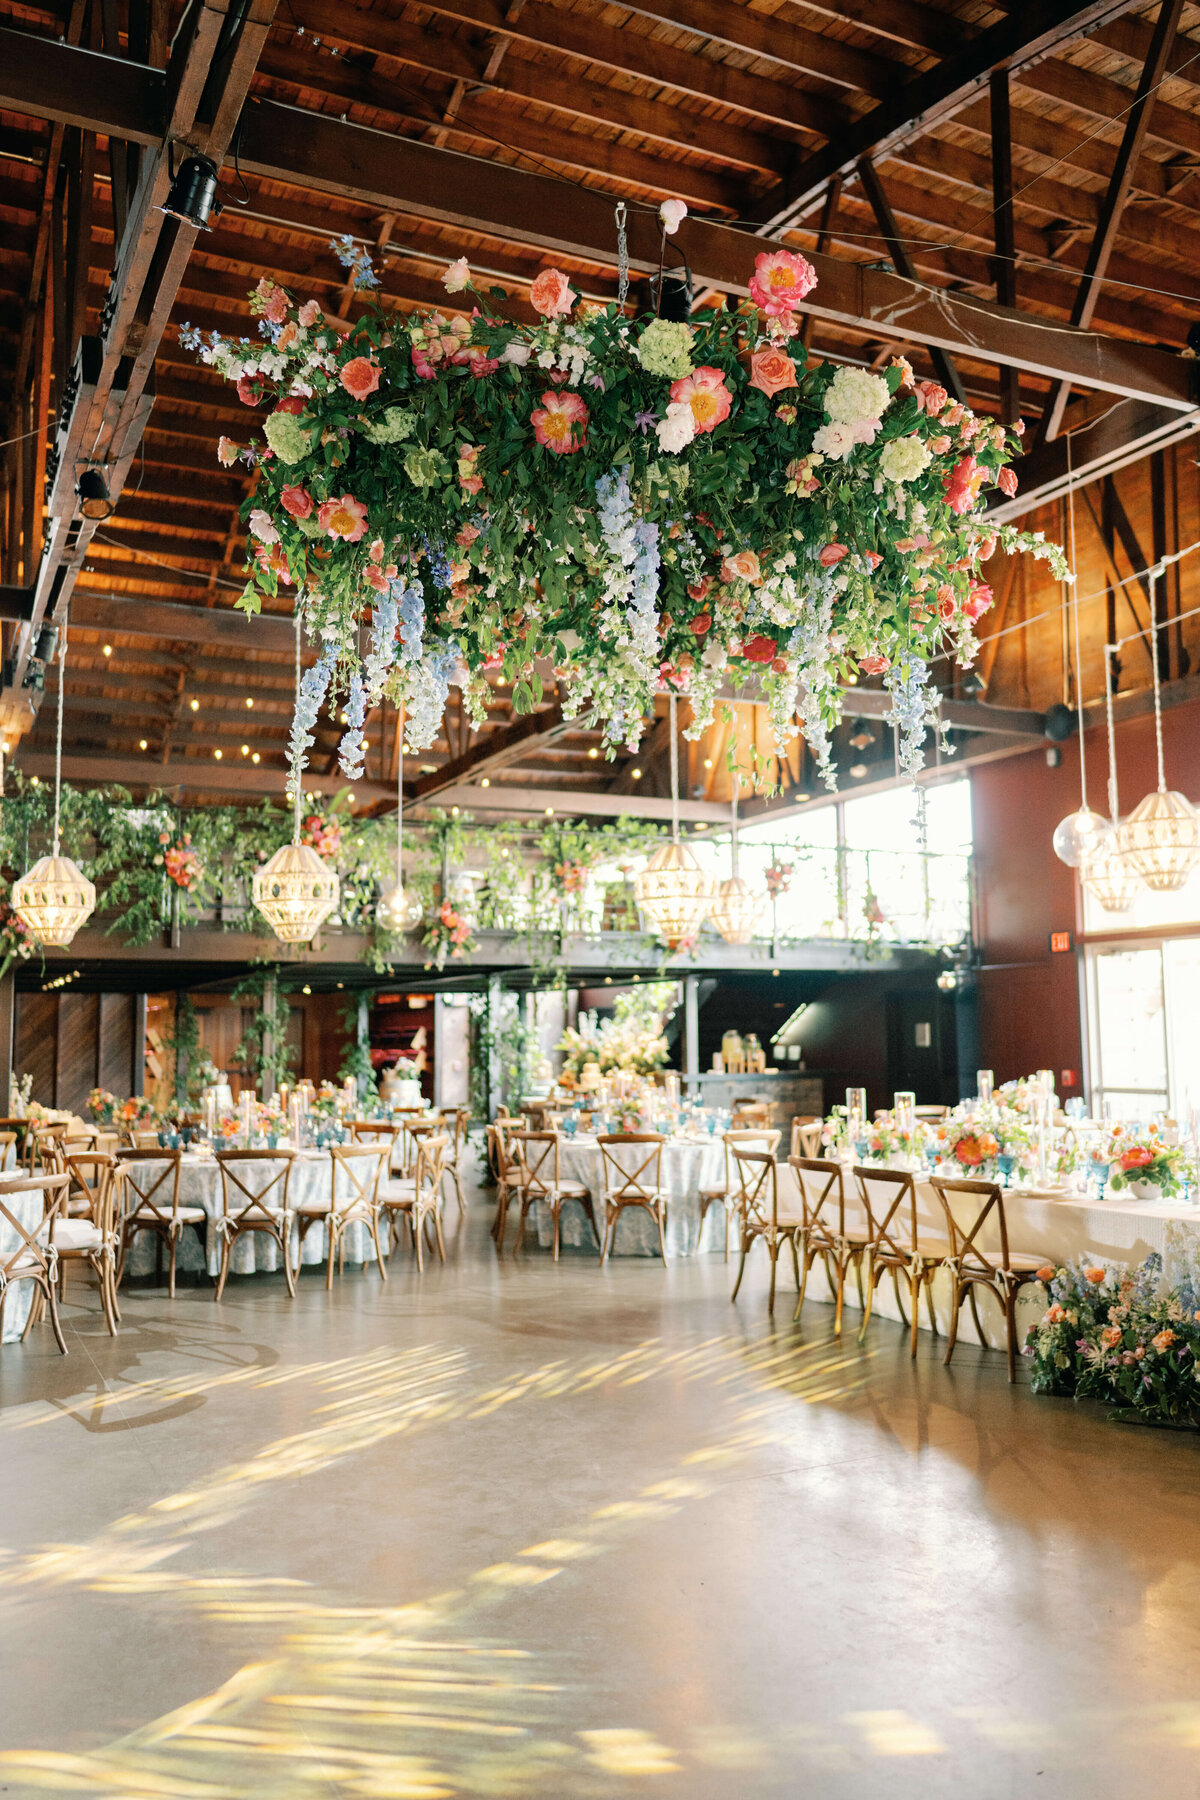 Vineyard wedding reception area